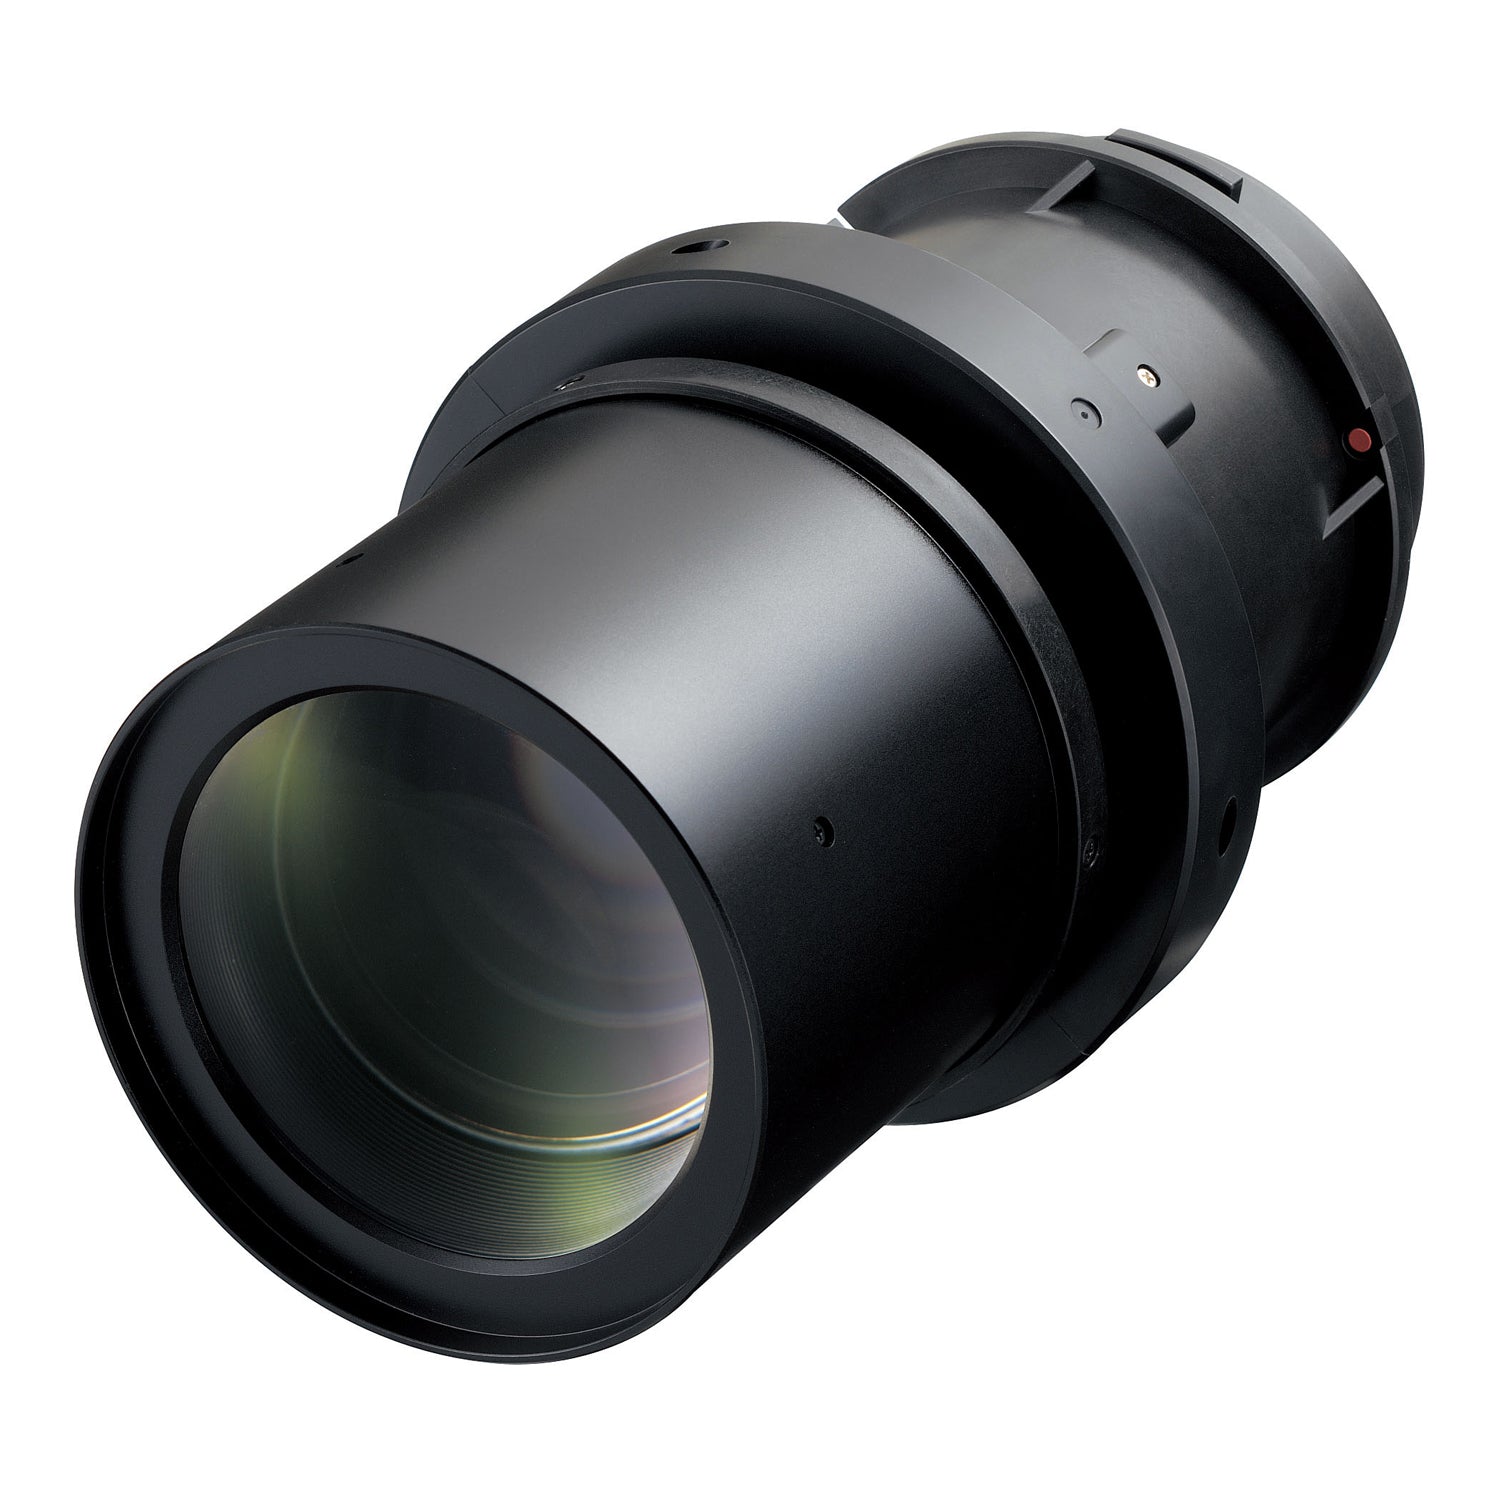 Panasonic ET-ELT23 3LCD Zoom Projector Lens